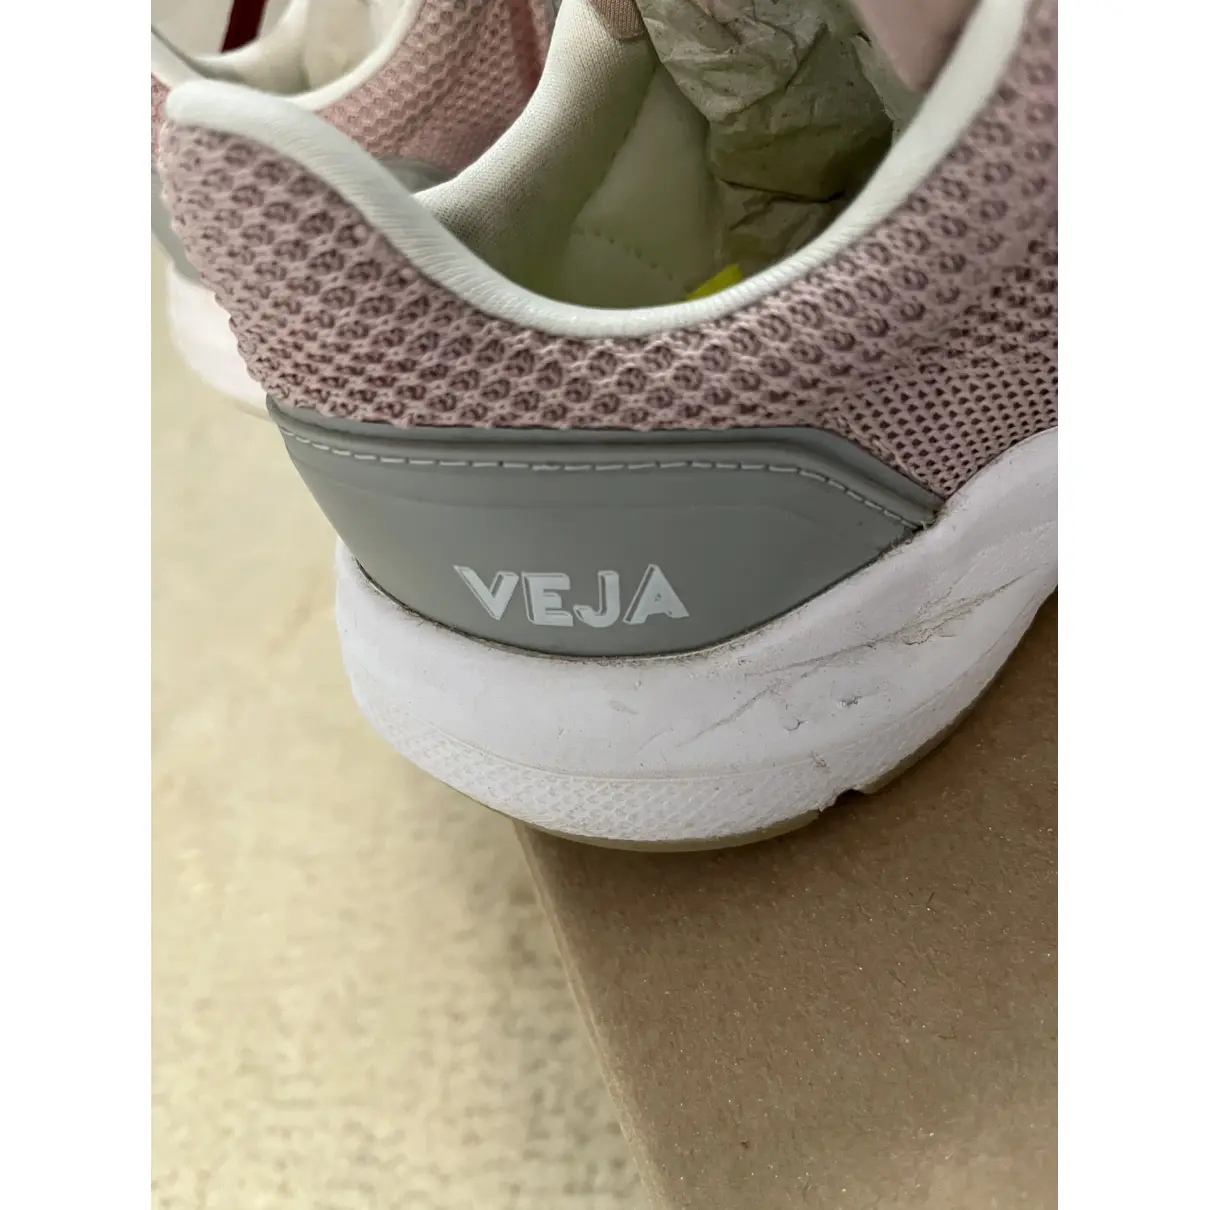 Buy Veja Trainers online